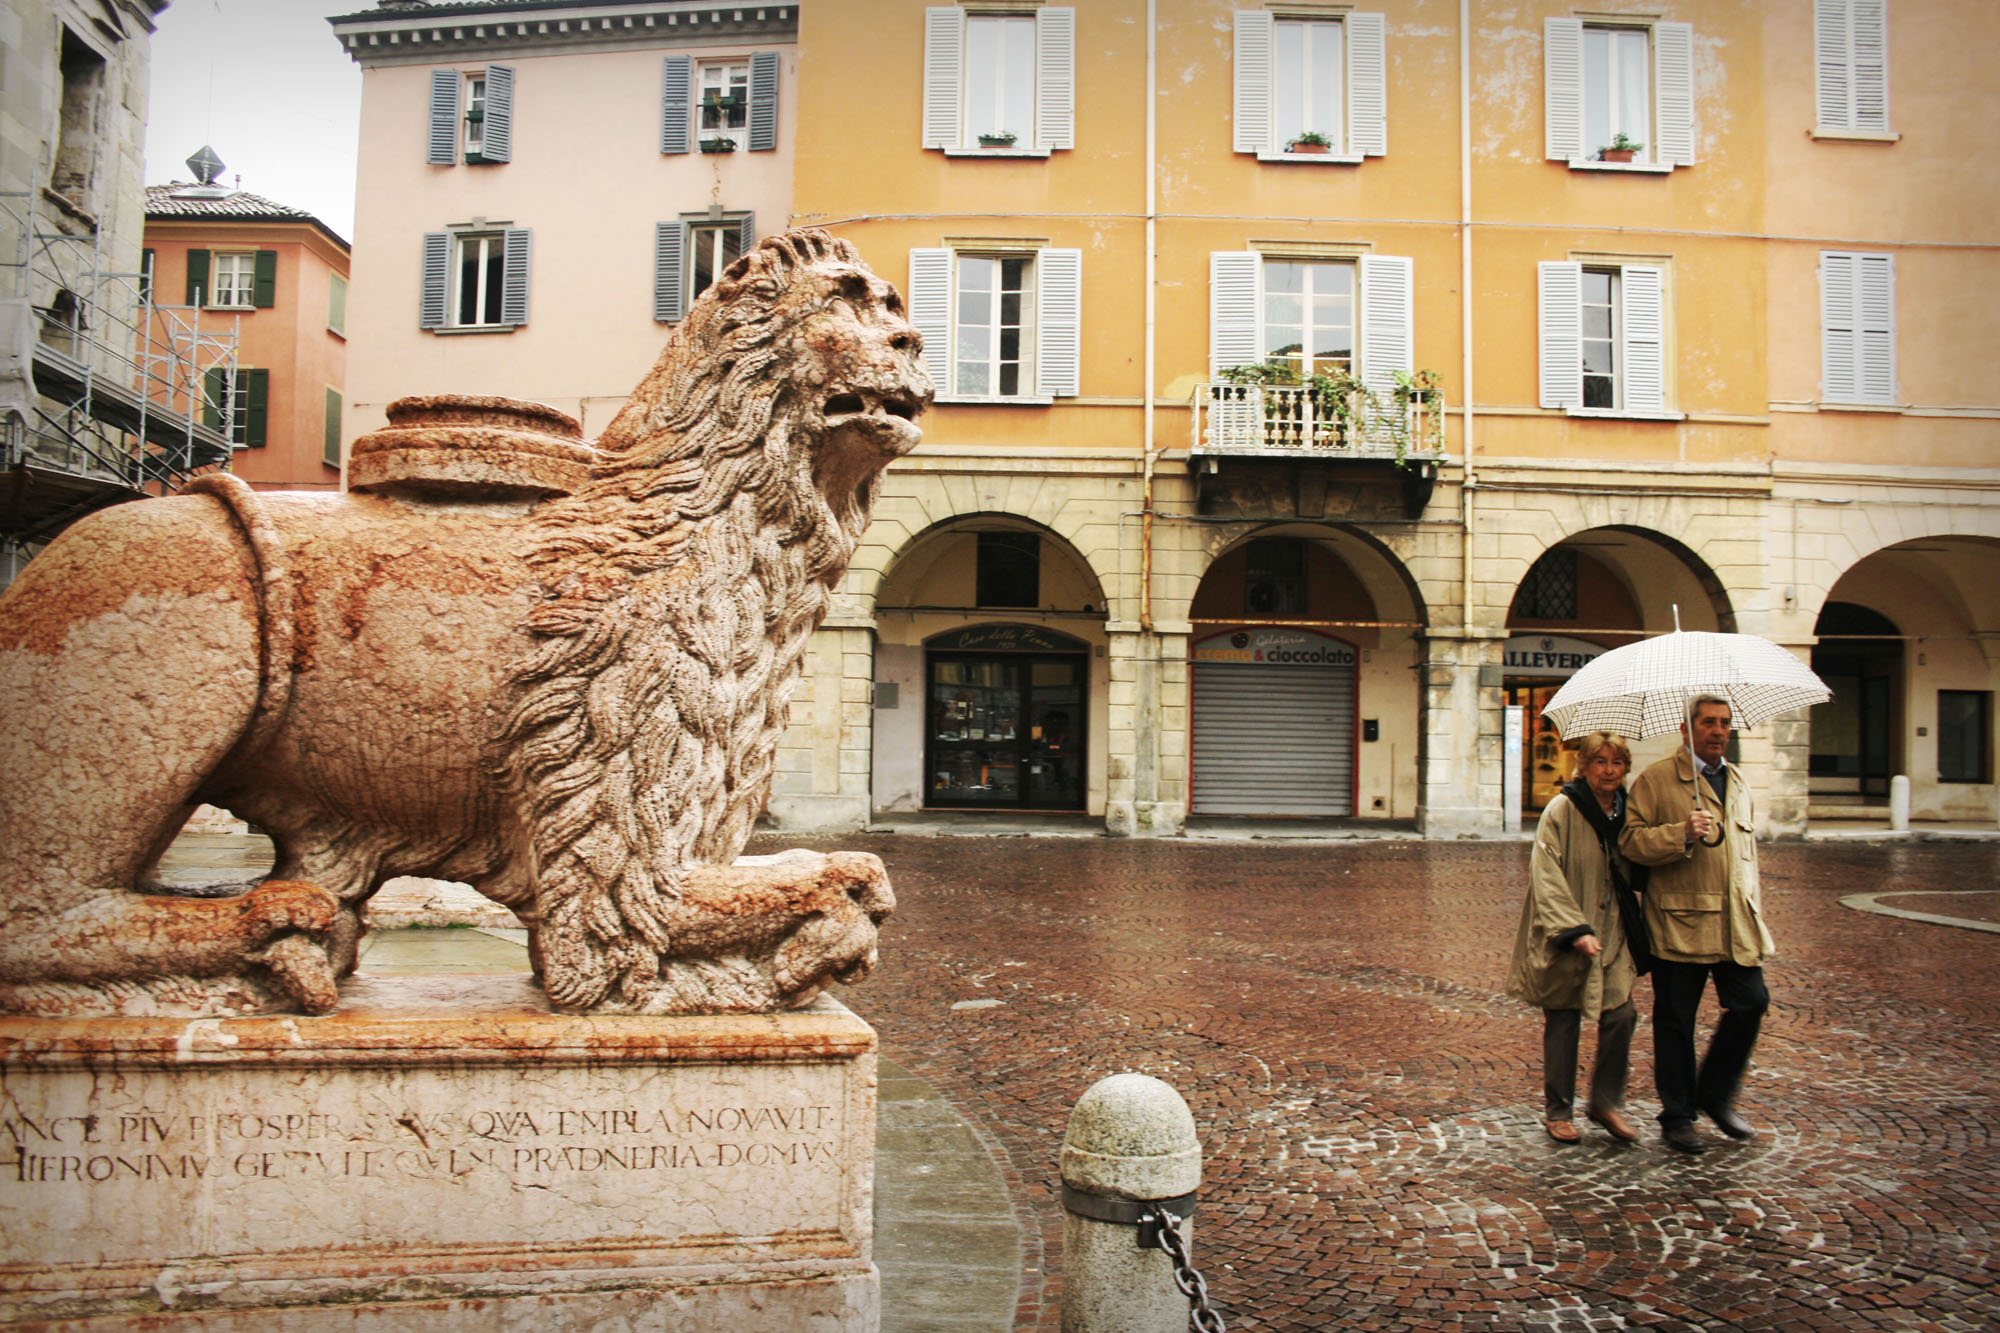 photo: https://upload.wikimedia.org/wikipedia/commons/a/ad/Piazza_San_Prospero-3.jpg